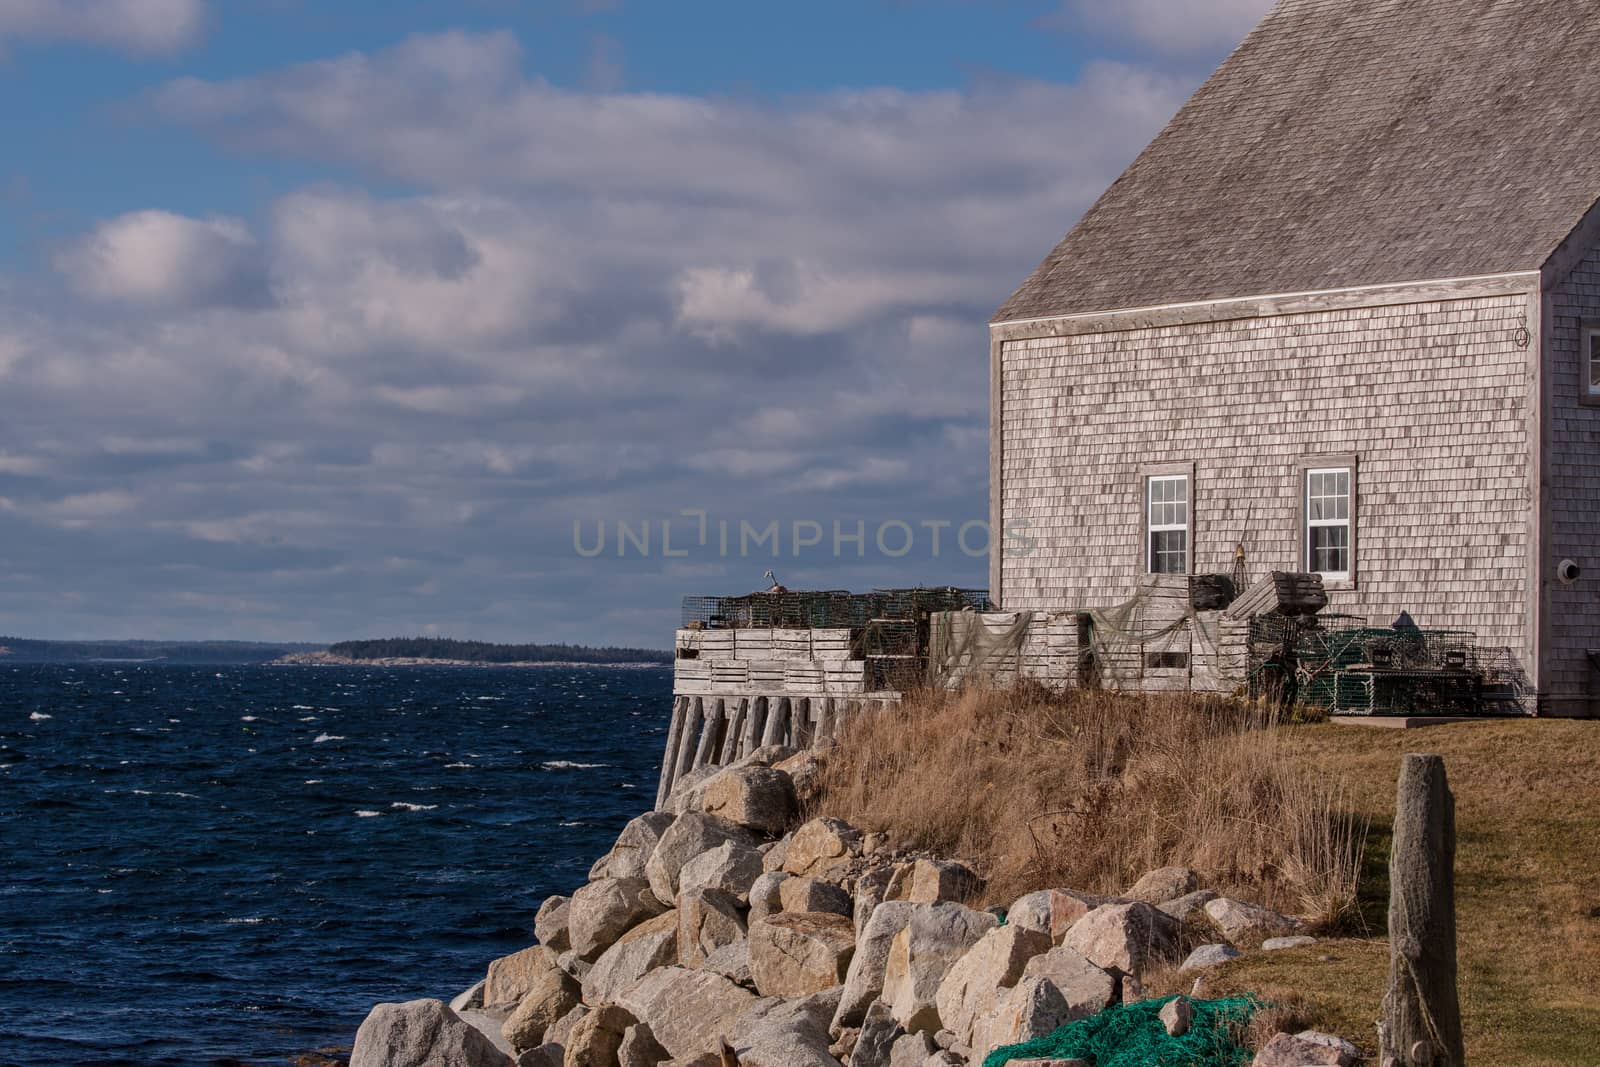 Nova Scotia coastal scenery in the Peggys Cove area by Ralli